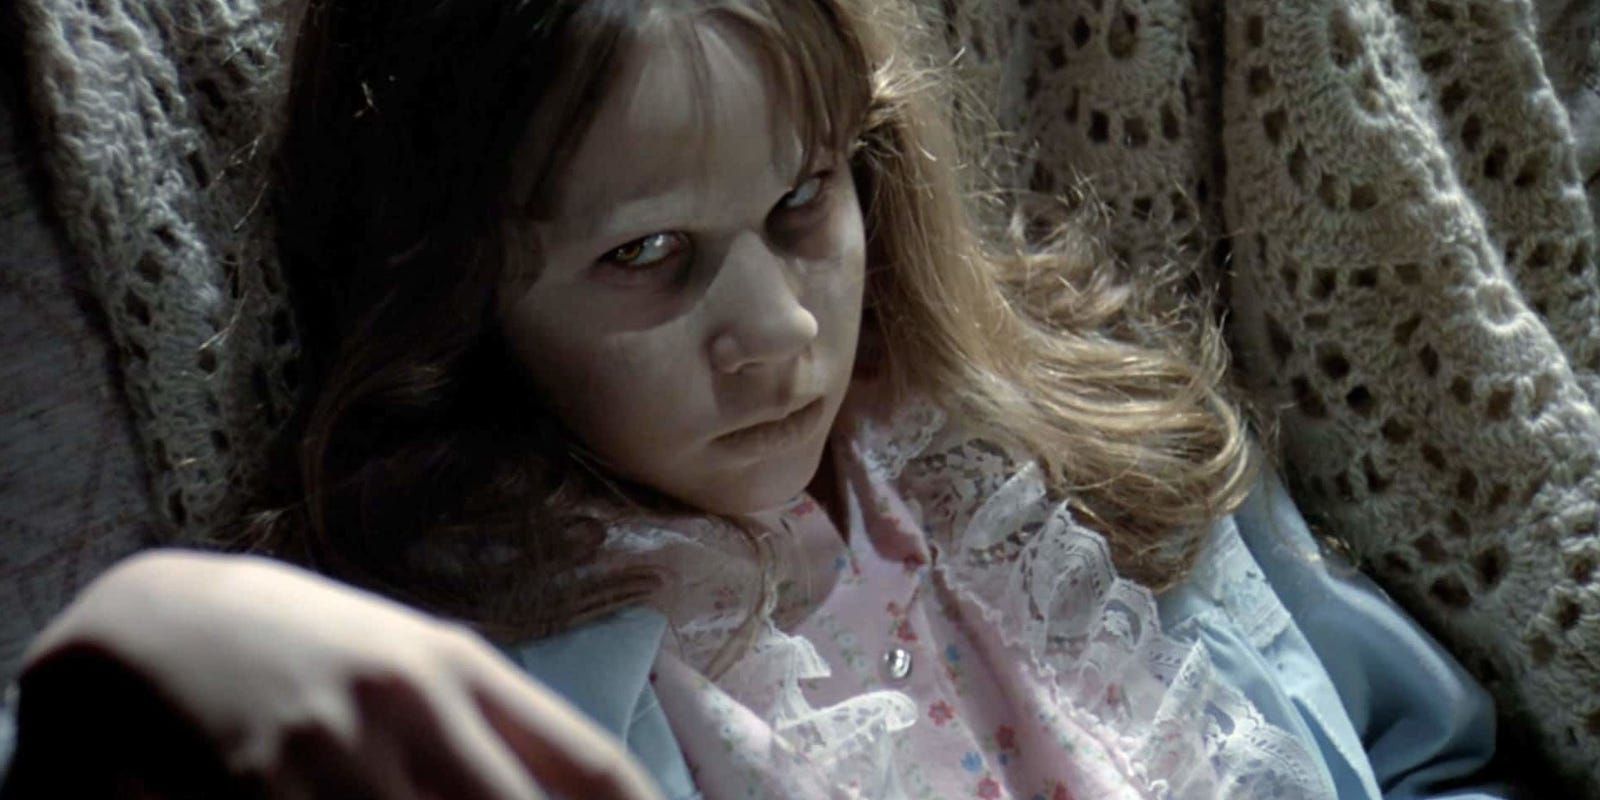 Linda Blair as Regan O'Neil in the Exorcist looking possessed.